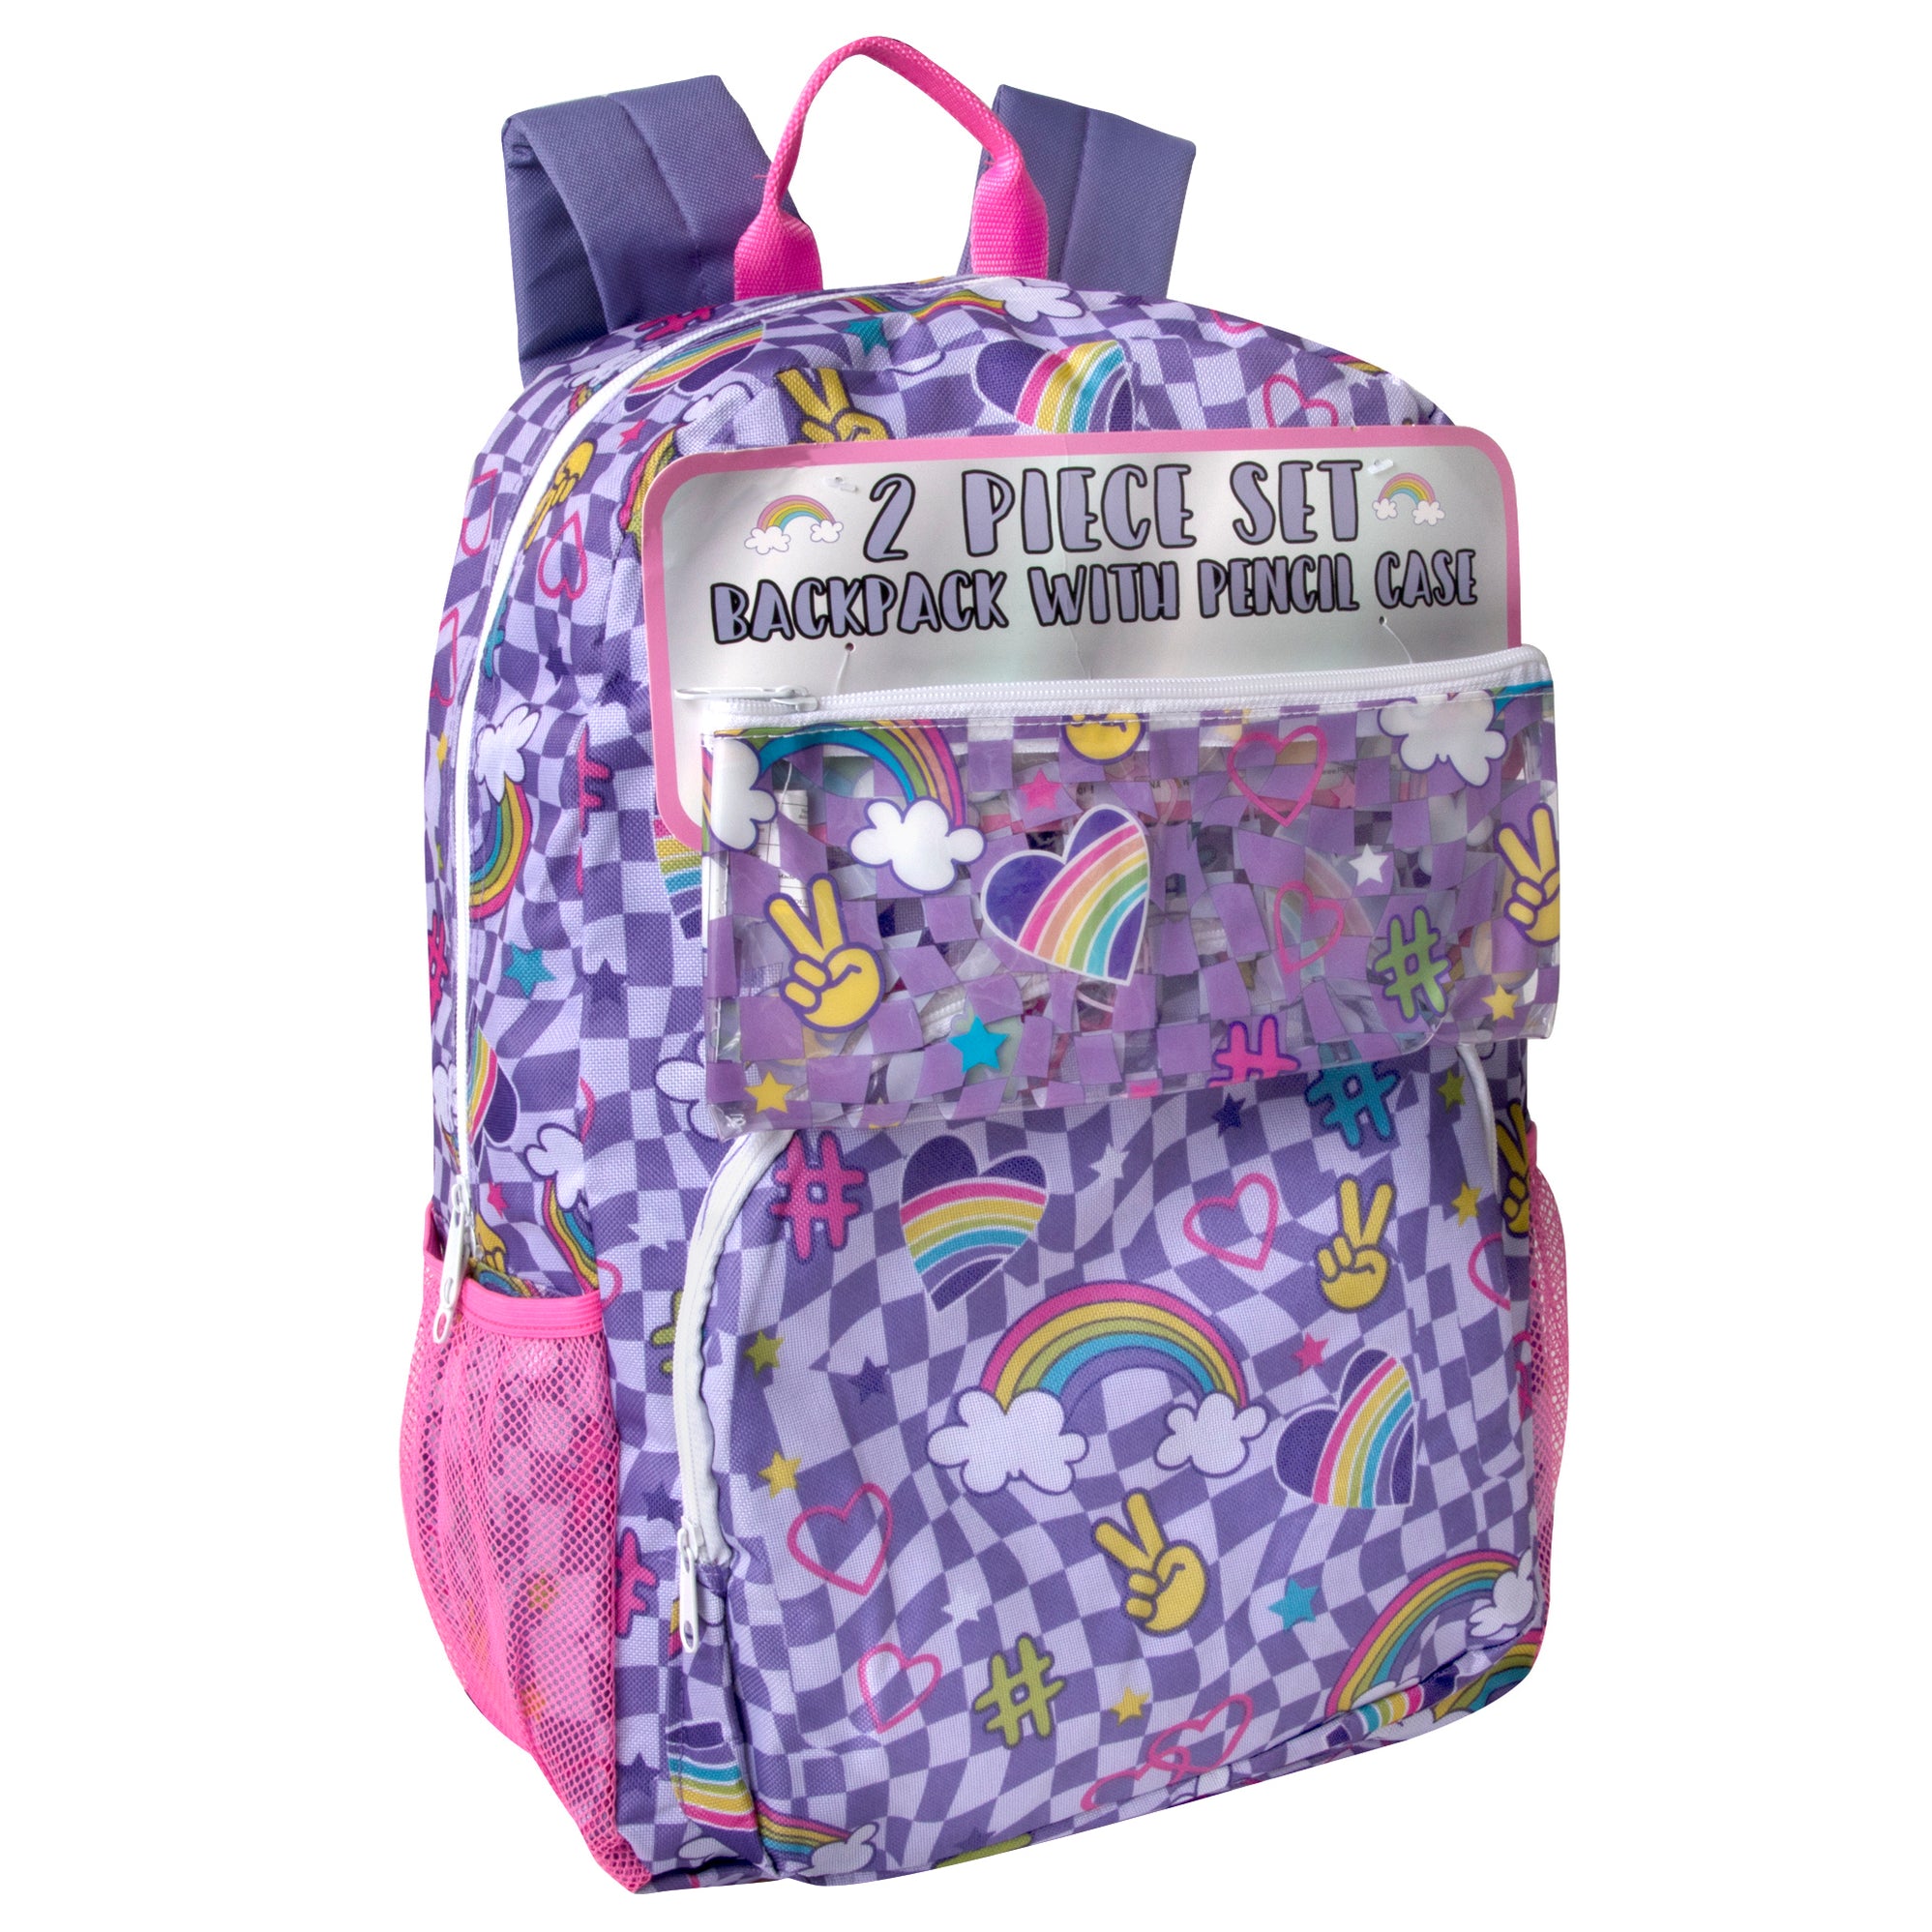 Wholesale Backpacks as Low as $2.50 each! — BagsInBulk.com